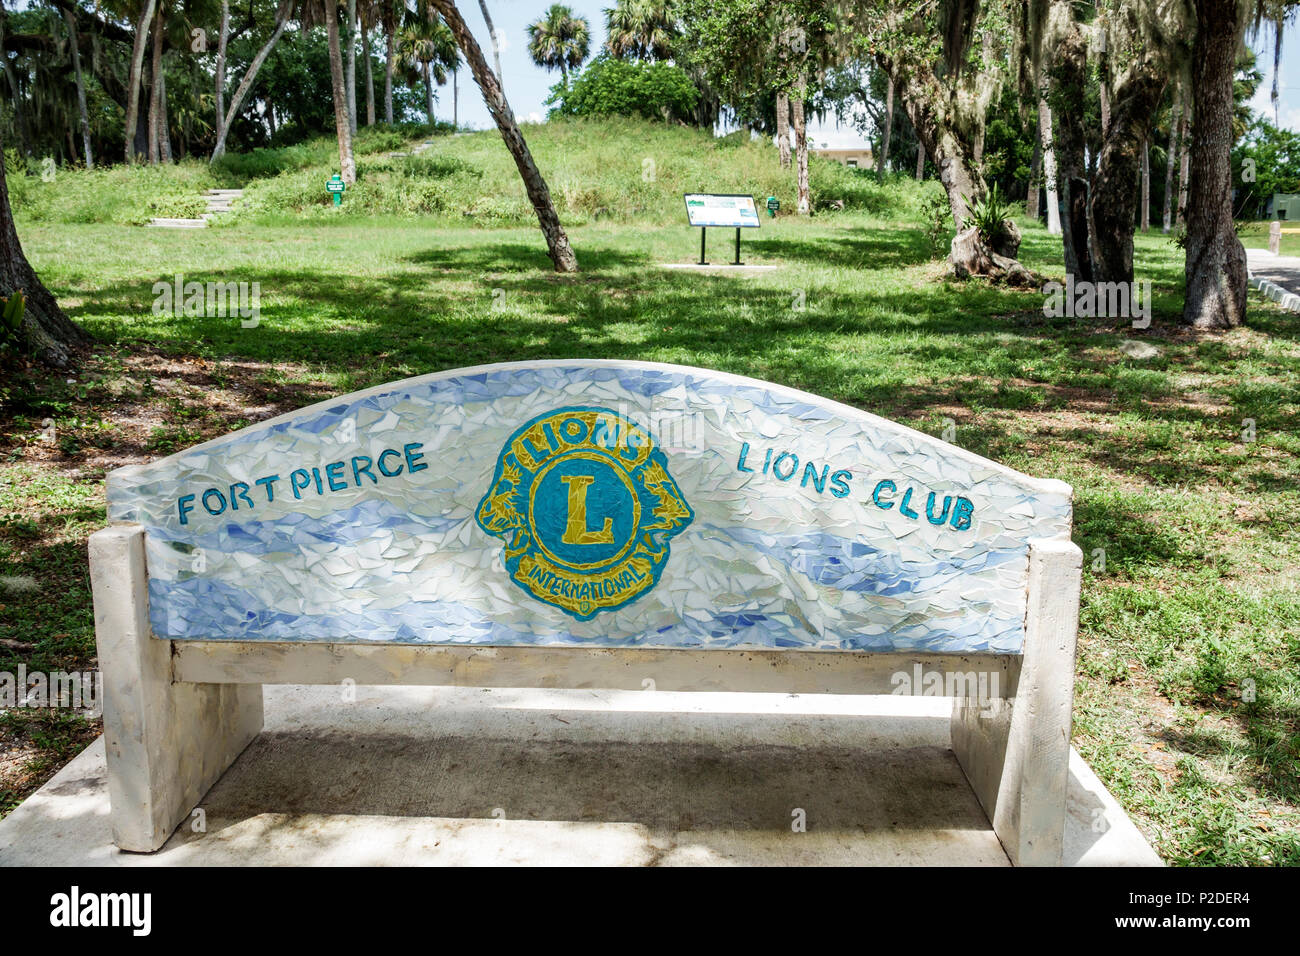 Fort Ft. Pierce Florida,Old Fort Park,archeological site,urban park,Ais Indian culture,Native American Indian,heritage,bench,sponsor organization,Lion Stock Photo